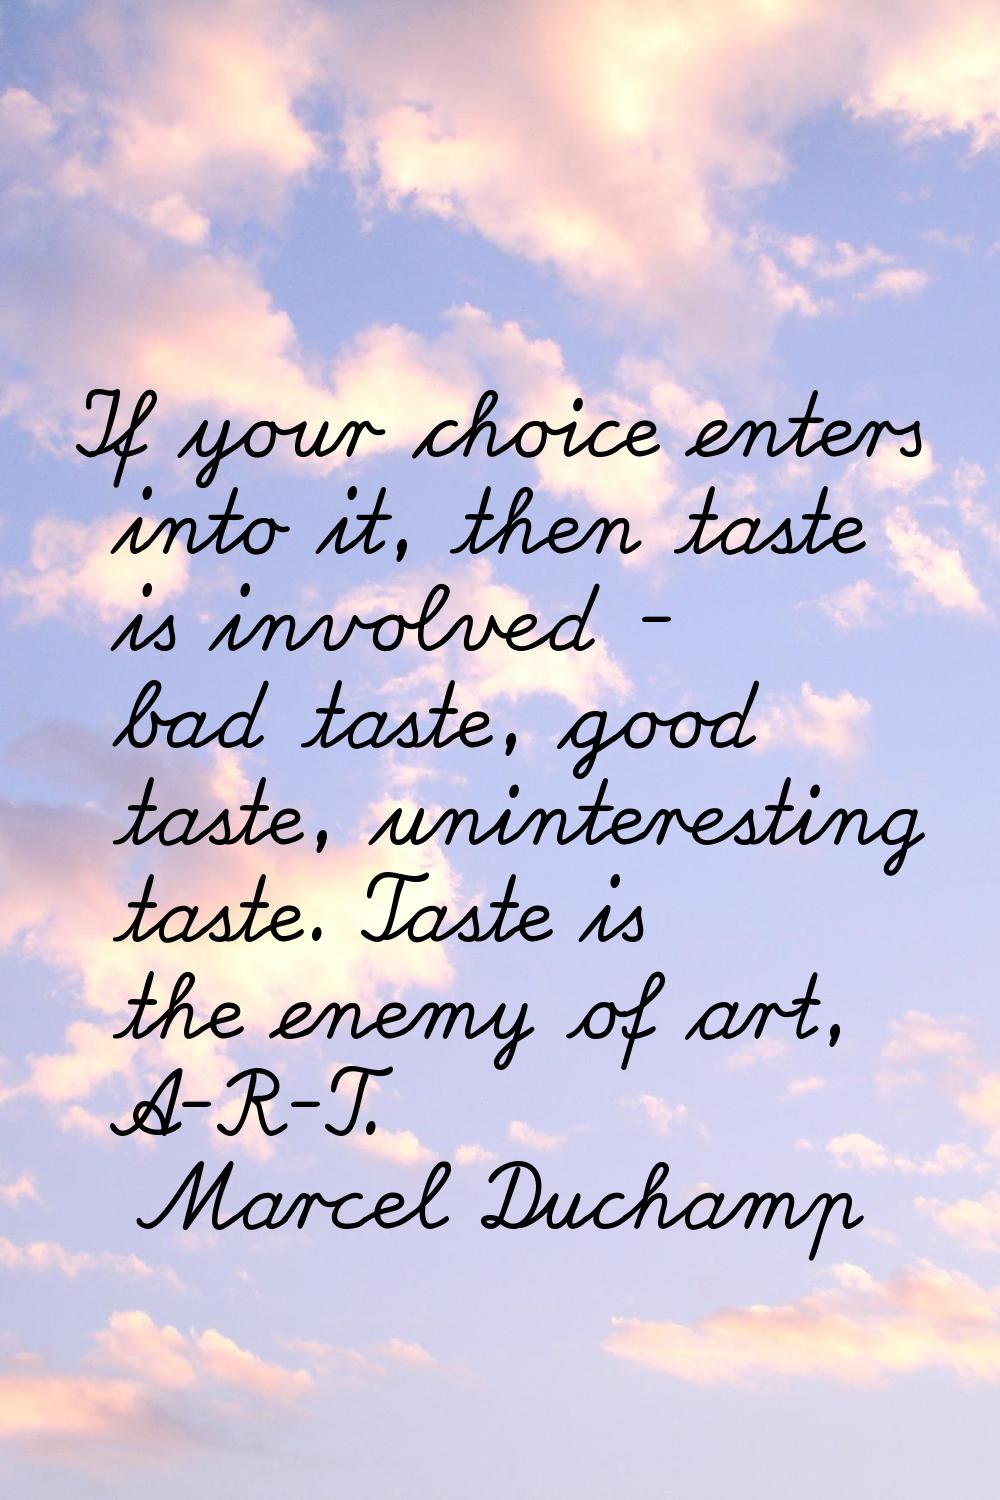 If your choice enters into it, then taste is involved - bad taste, good taste, uninteresting taste.